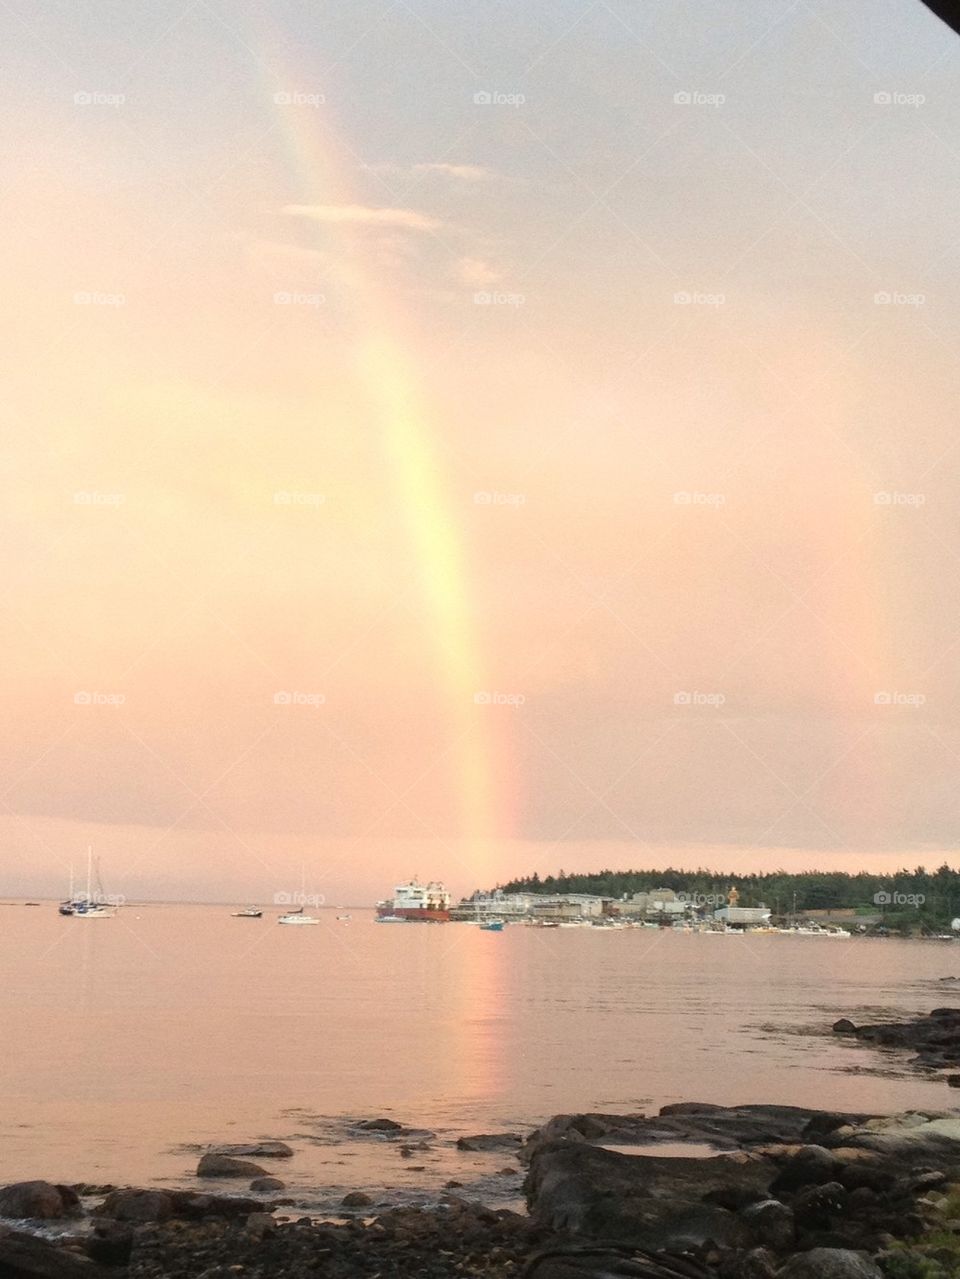 Rainbow over boats